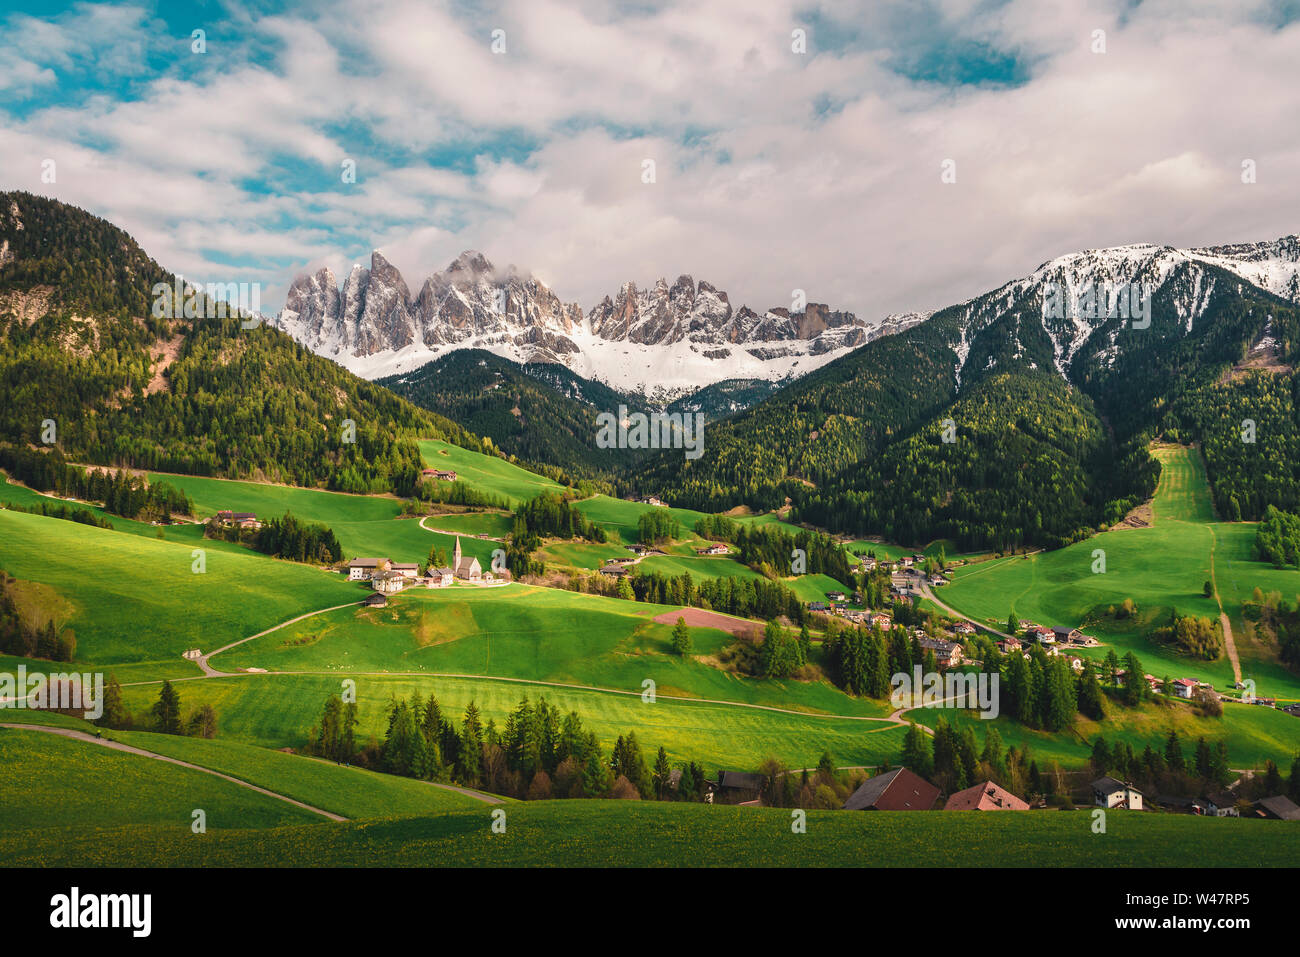 Famous alpine Santa Maddalena village with Dolomites mountains in background, Val di Funes valley, Trentino Alto Adige region, Italy, Europe Stock Photo